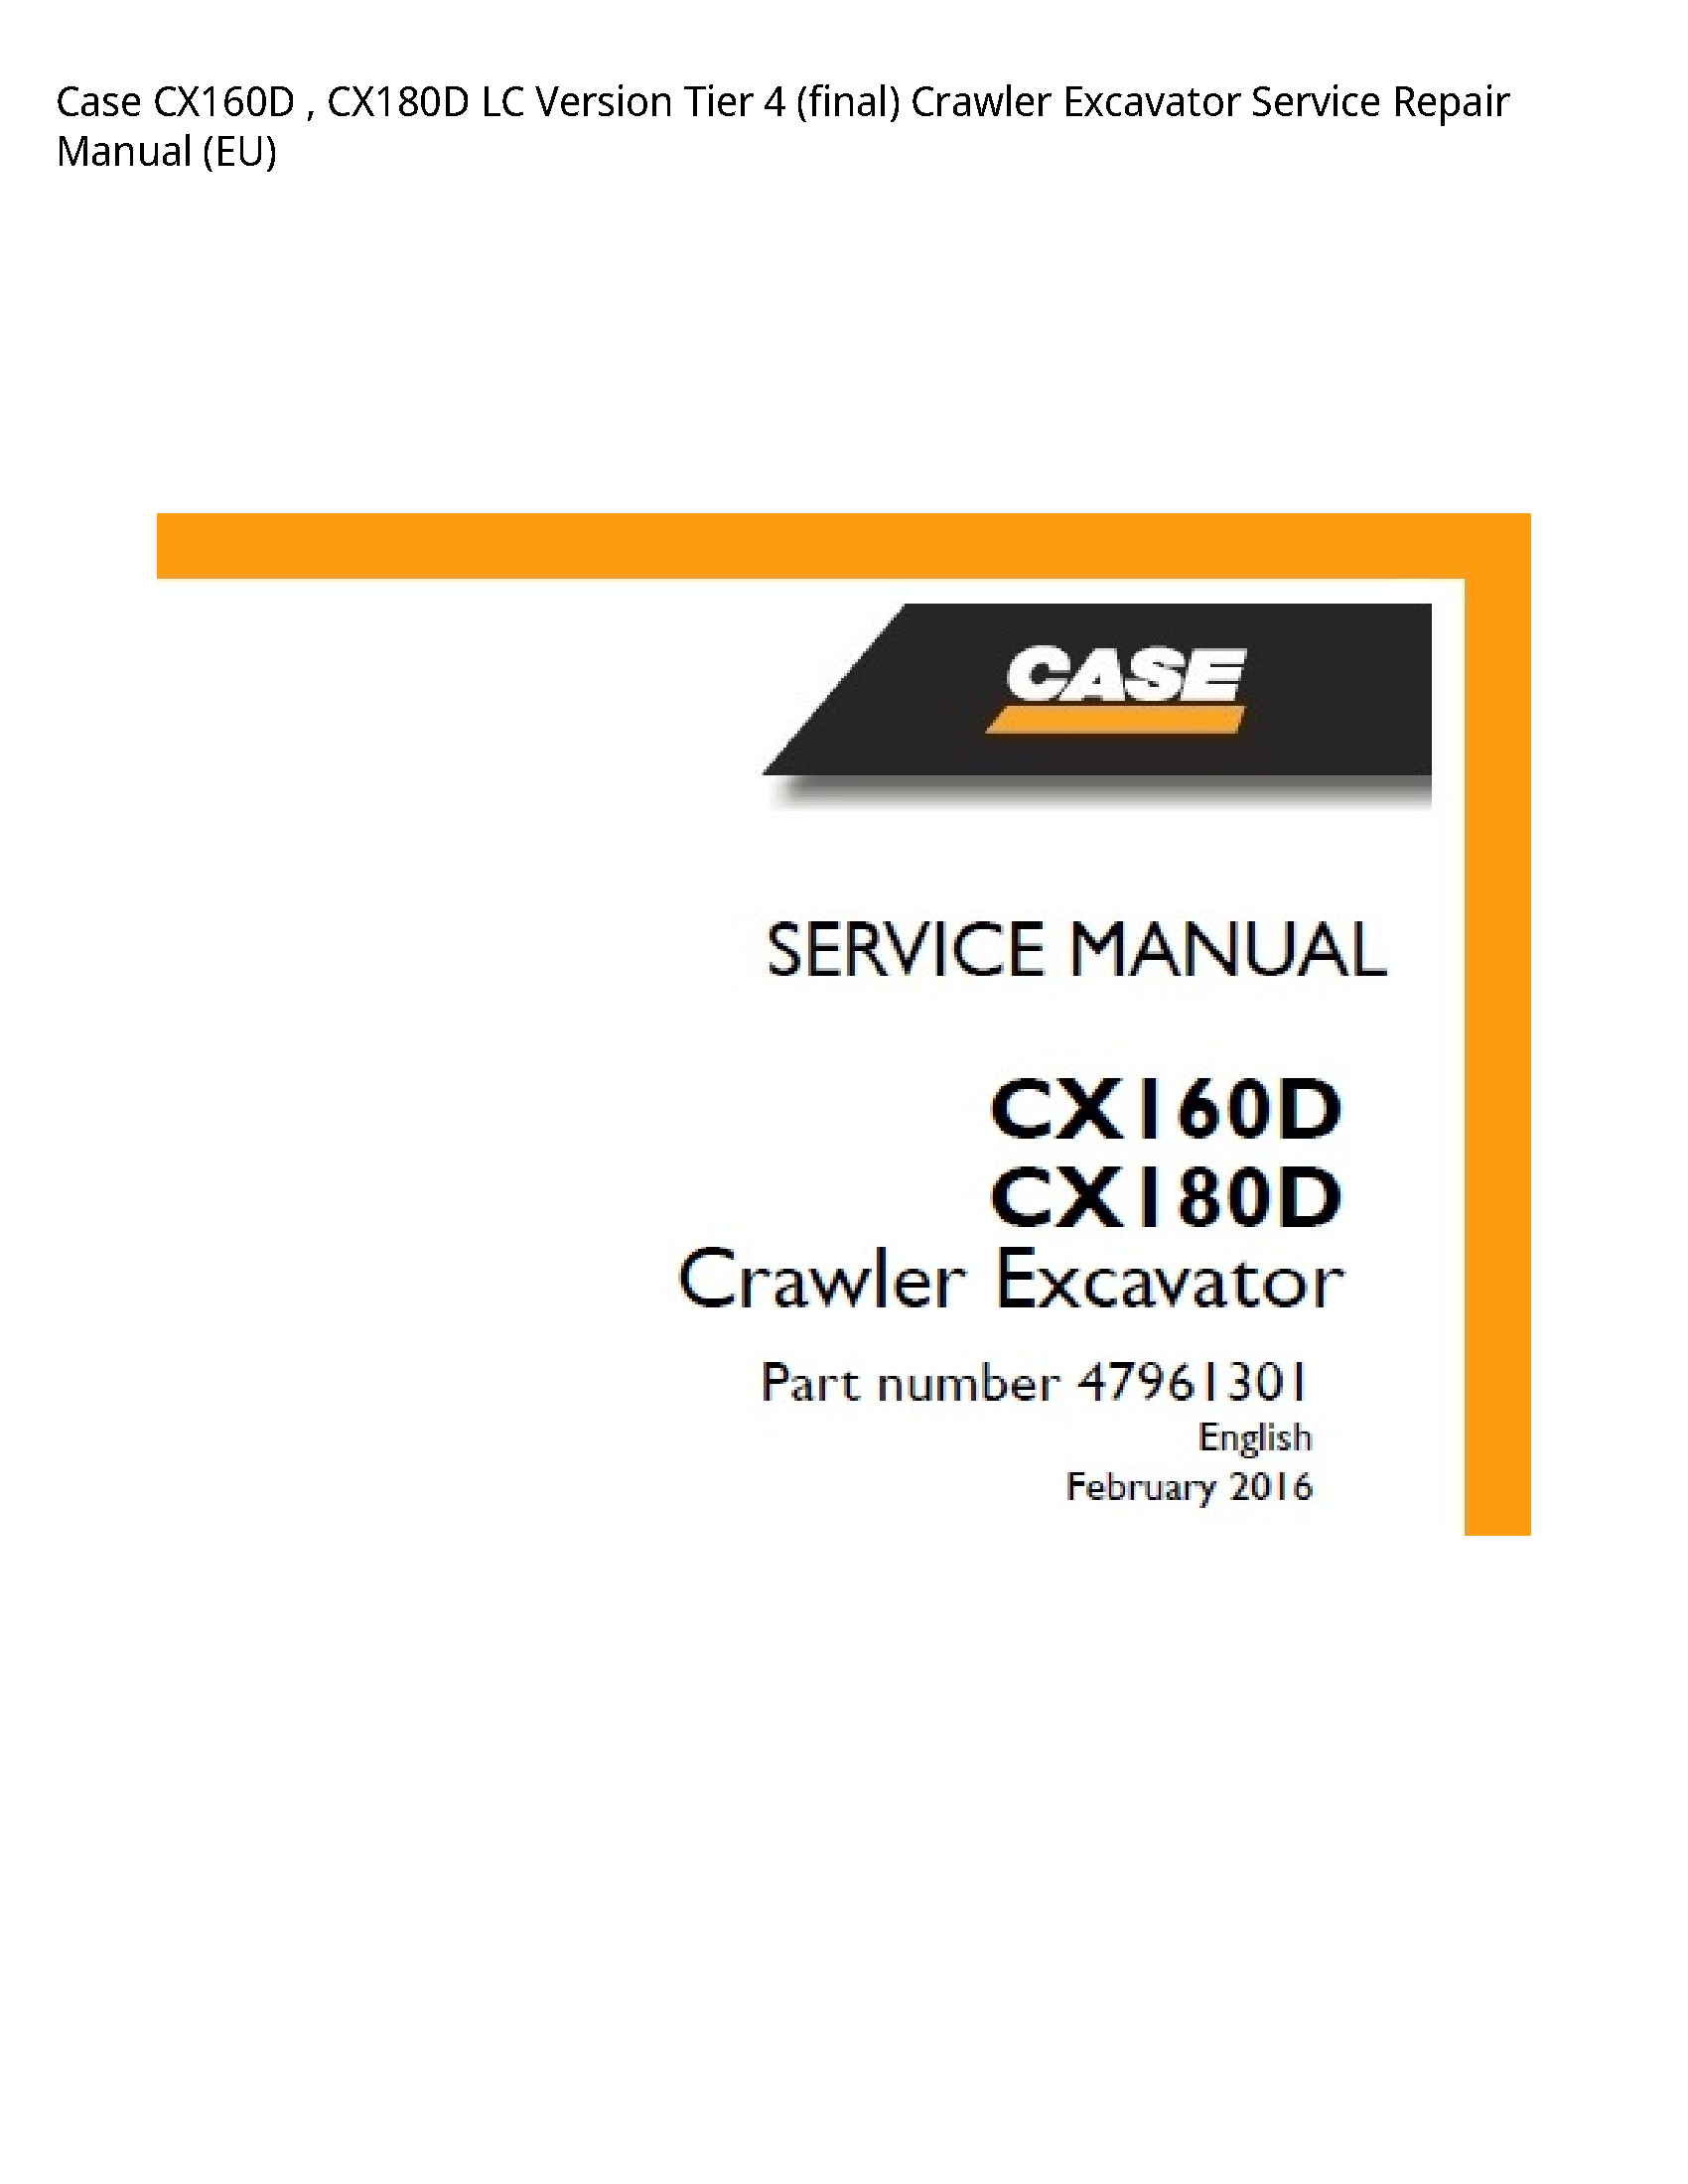 Case/Case IH CX160D LC Version Tier (final) Crawler Excavator manual